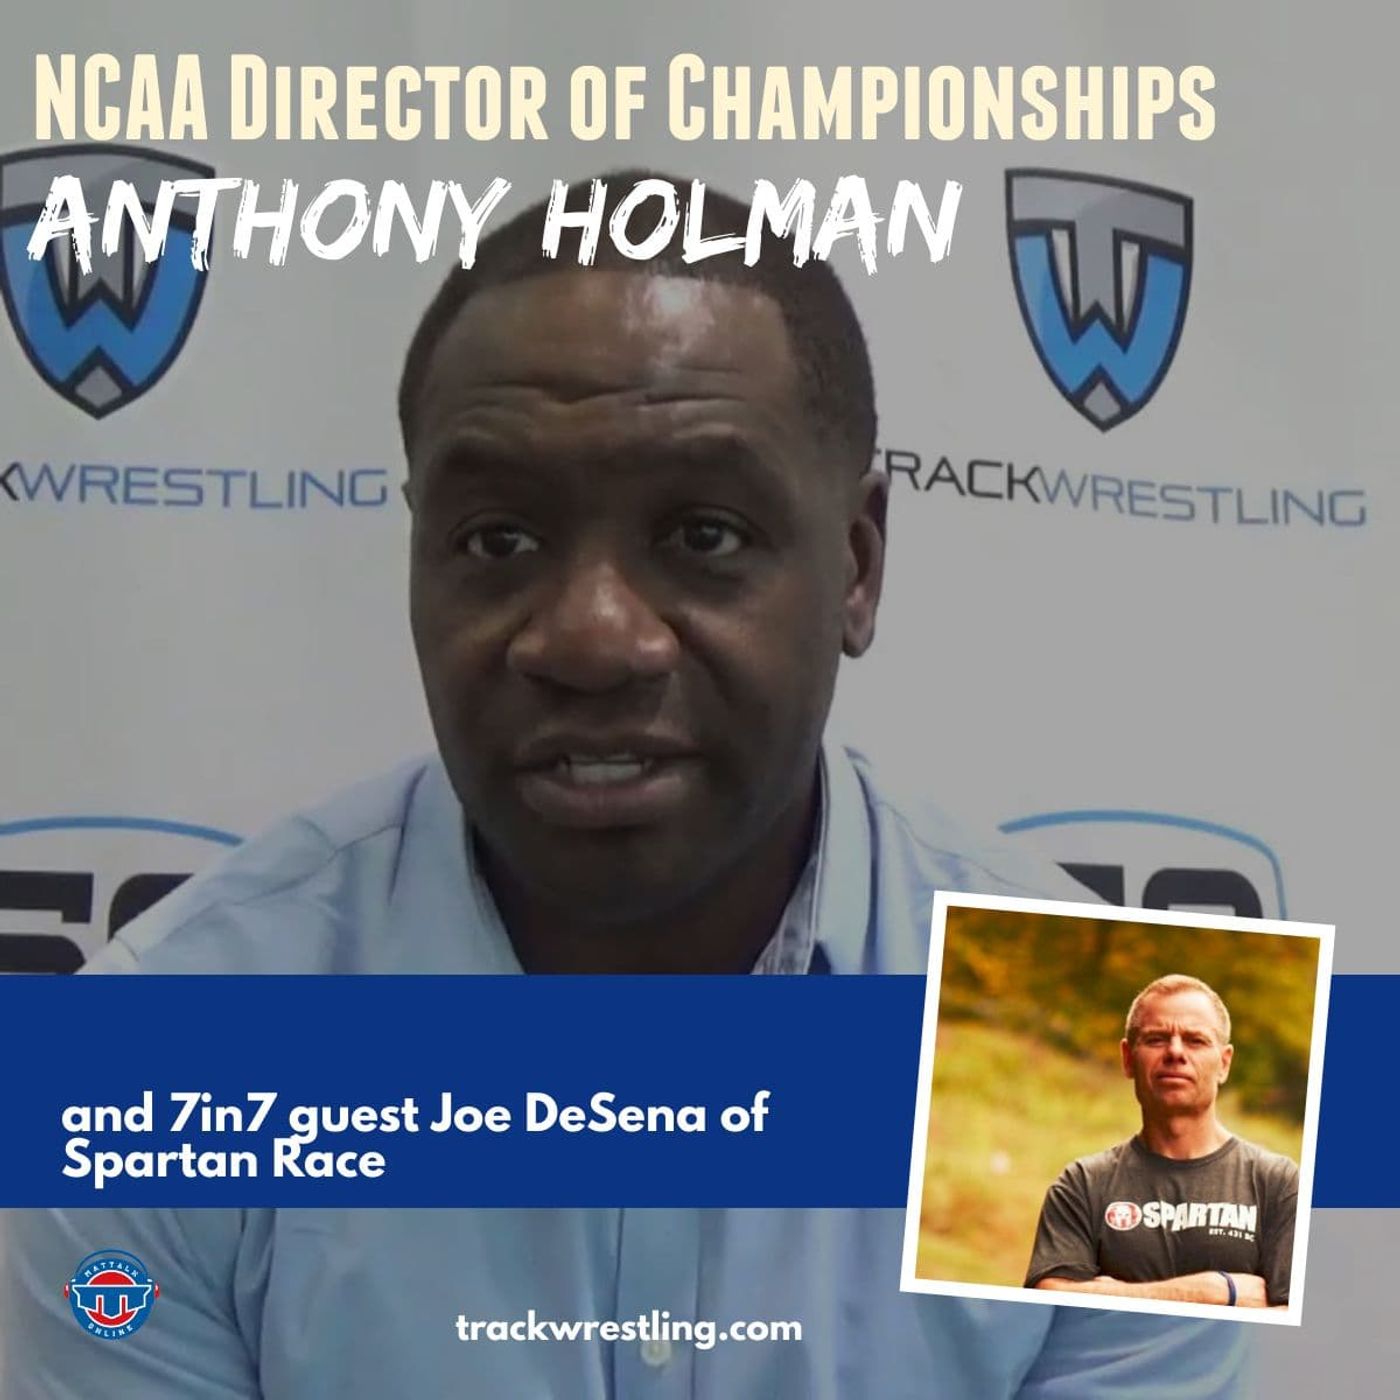 Spartan Race’s Joe De Sena and NCAA Managing Director of Championships Anthony Holman - OTM601